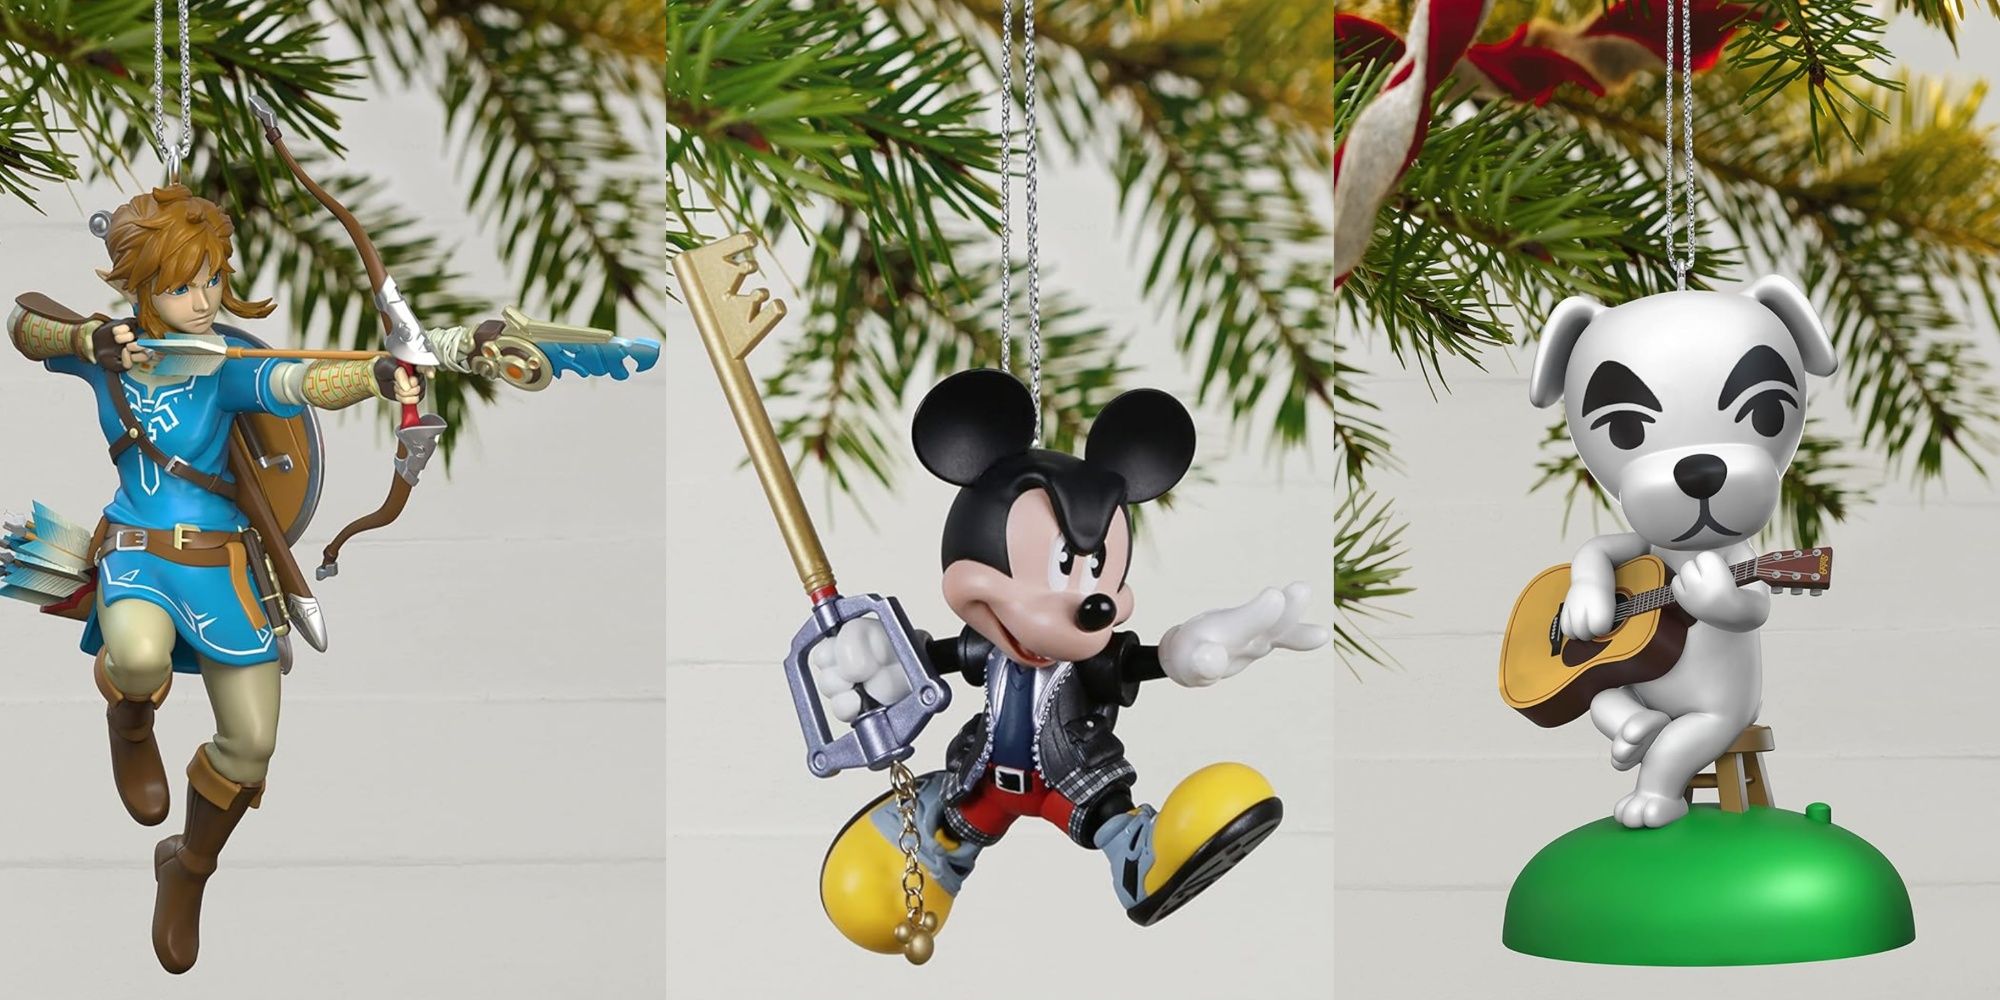 Split images of Link, King Mickey, and KK Slider Hallmark Christmas ornaments